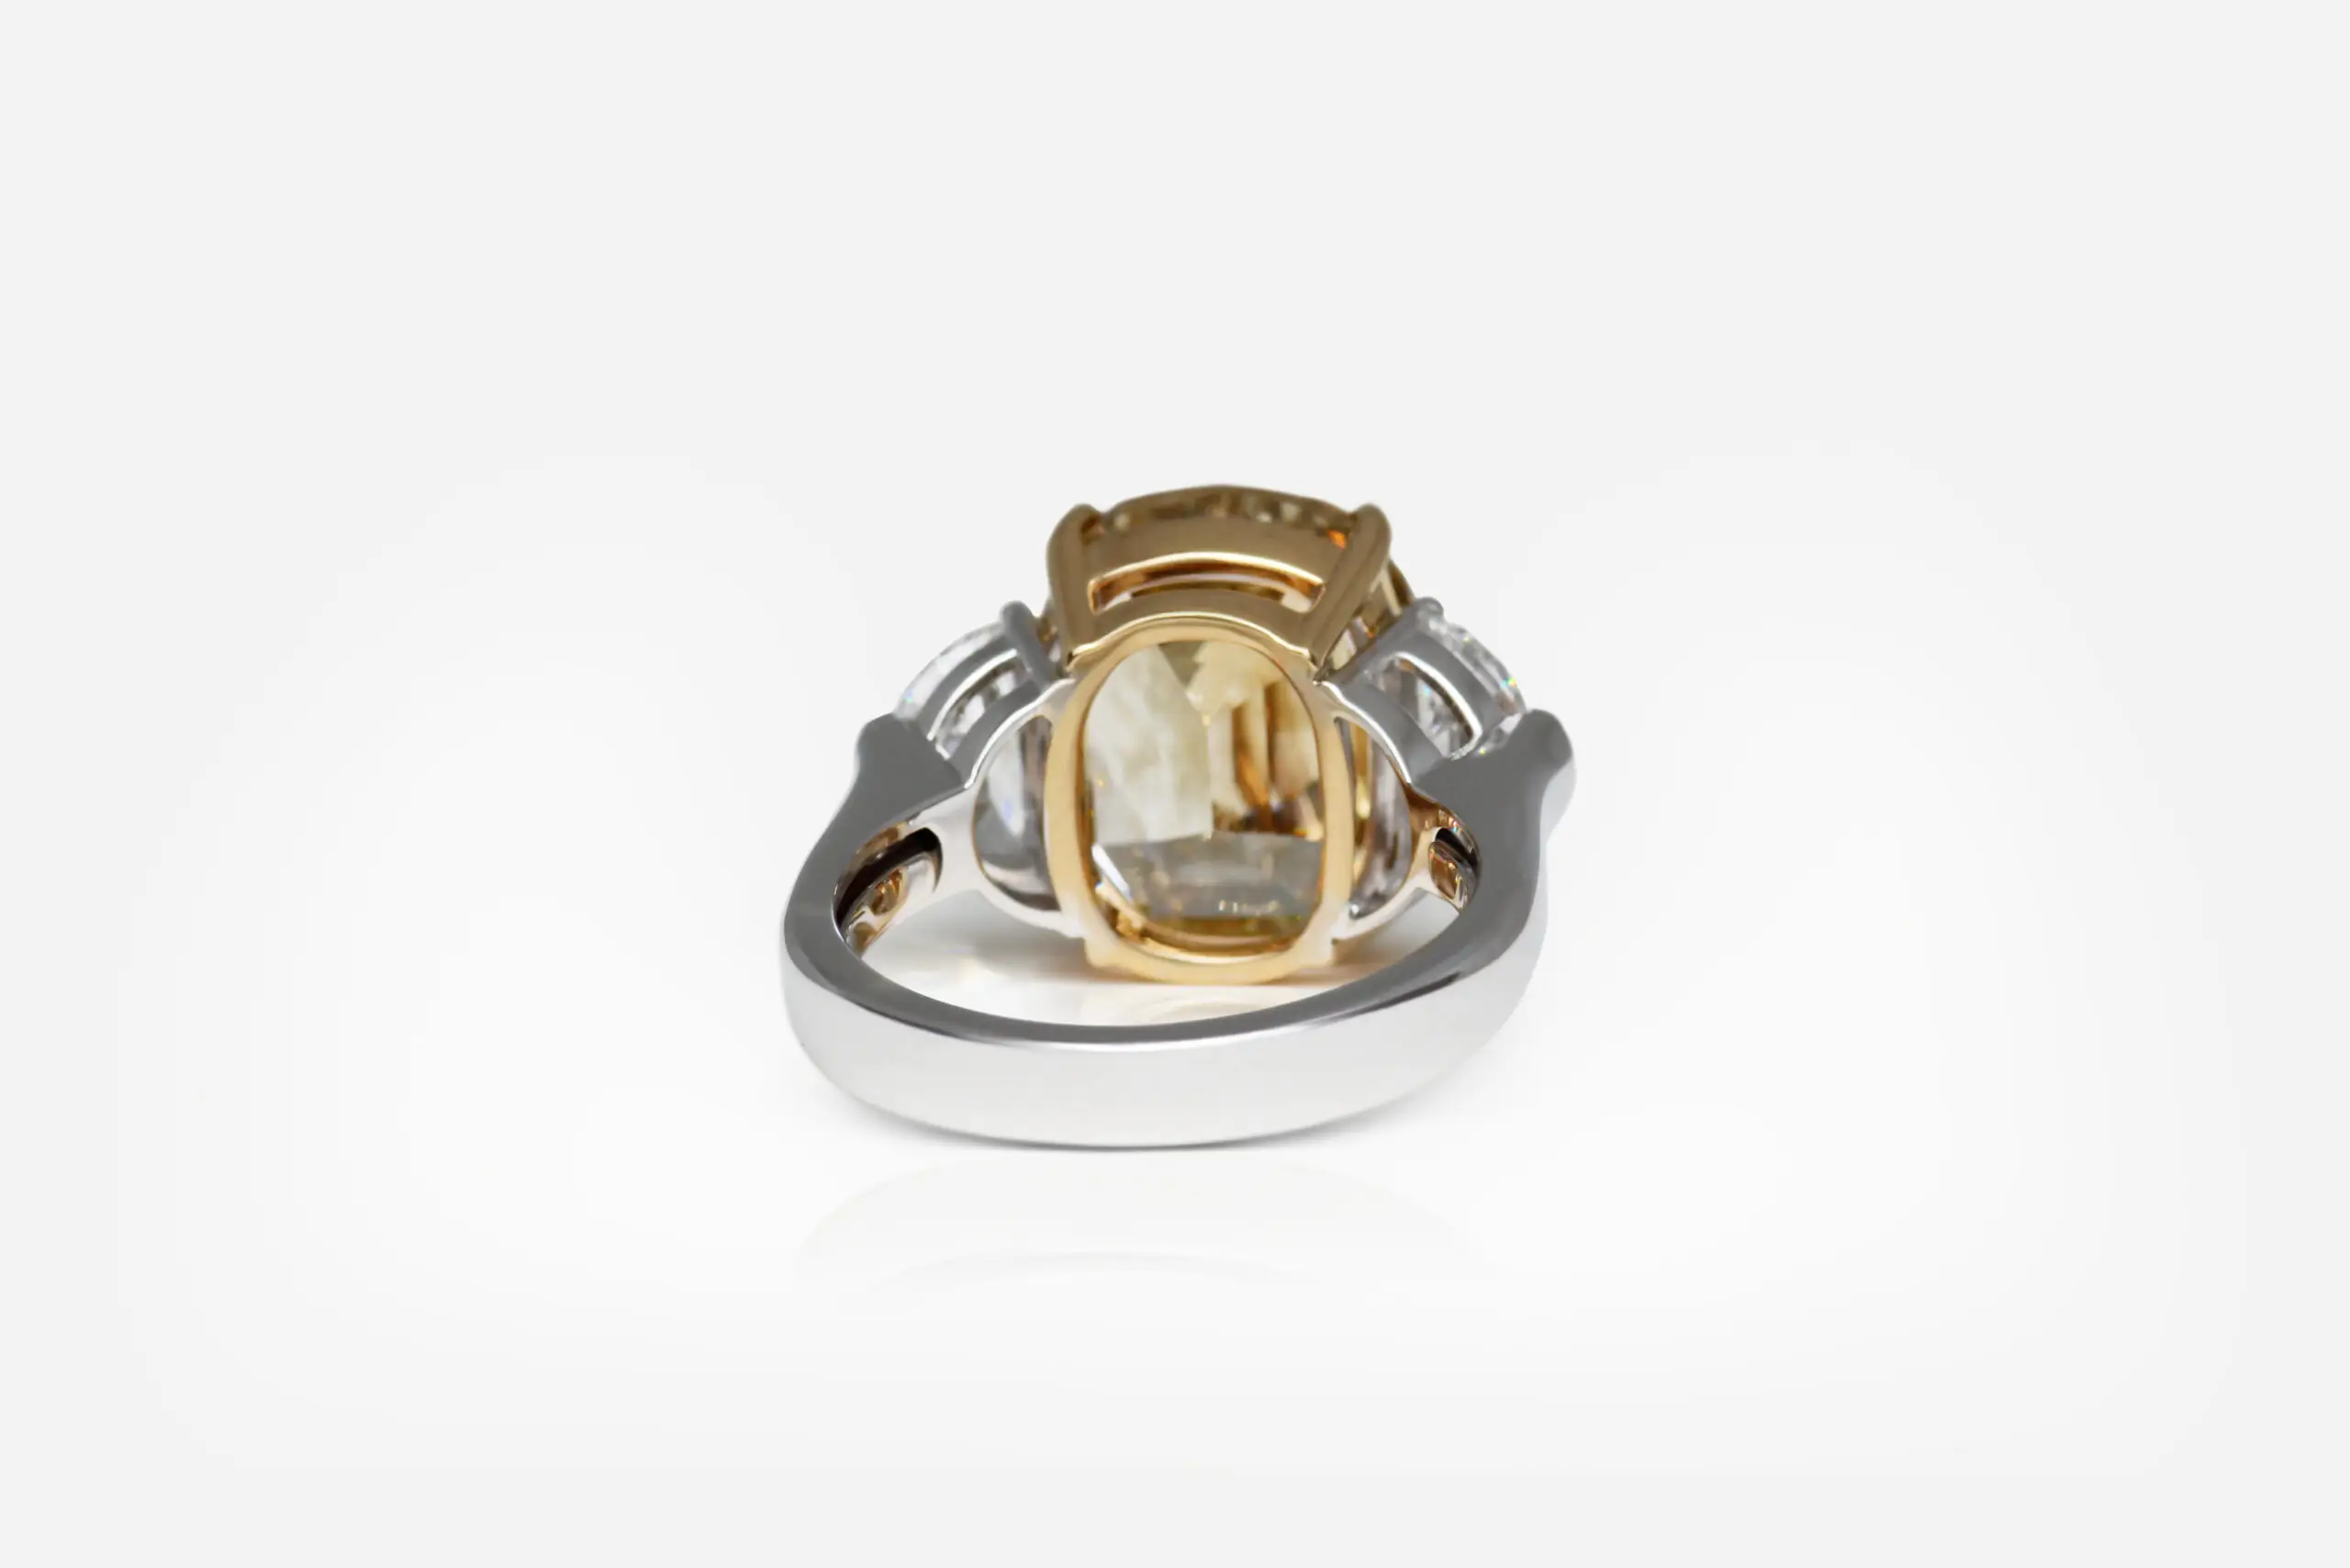 8.19 carat Fancy Deep Brownish Yellow SI1 Cushion Shape Diamond Ring GIA - thumb picture 1